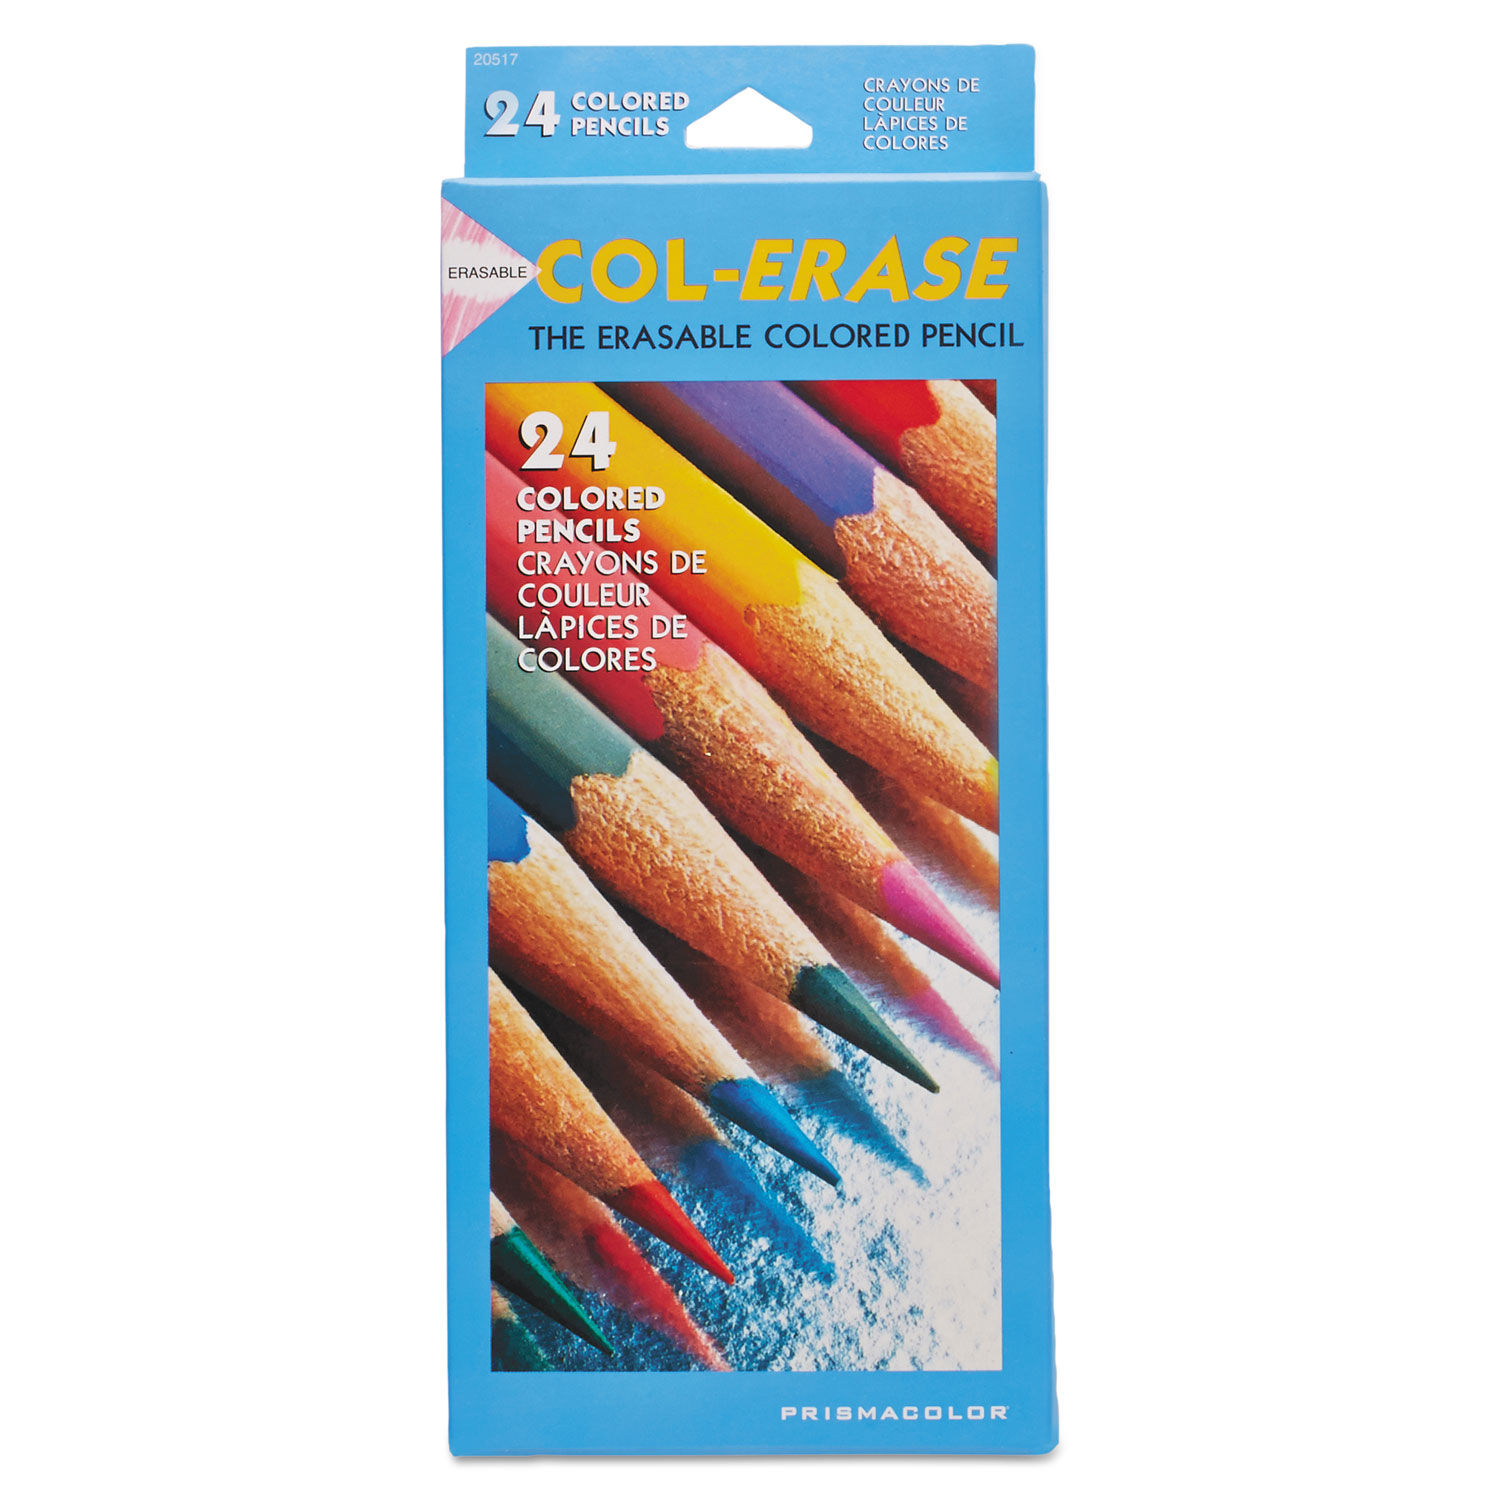  Fulmoon 24 Pcs Eraser Pencils, Eraser Pencils with